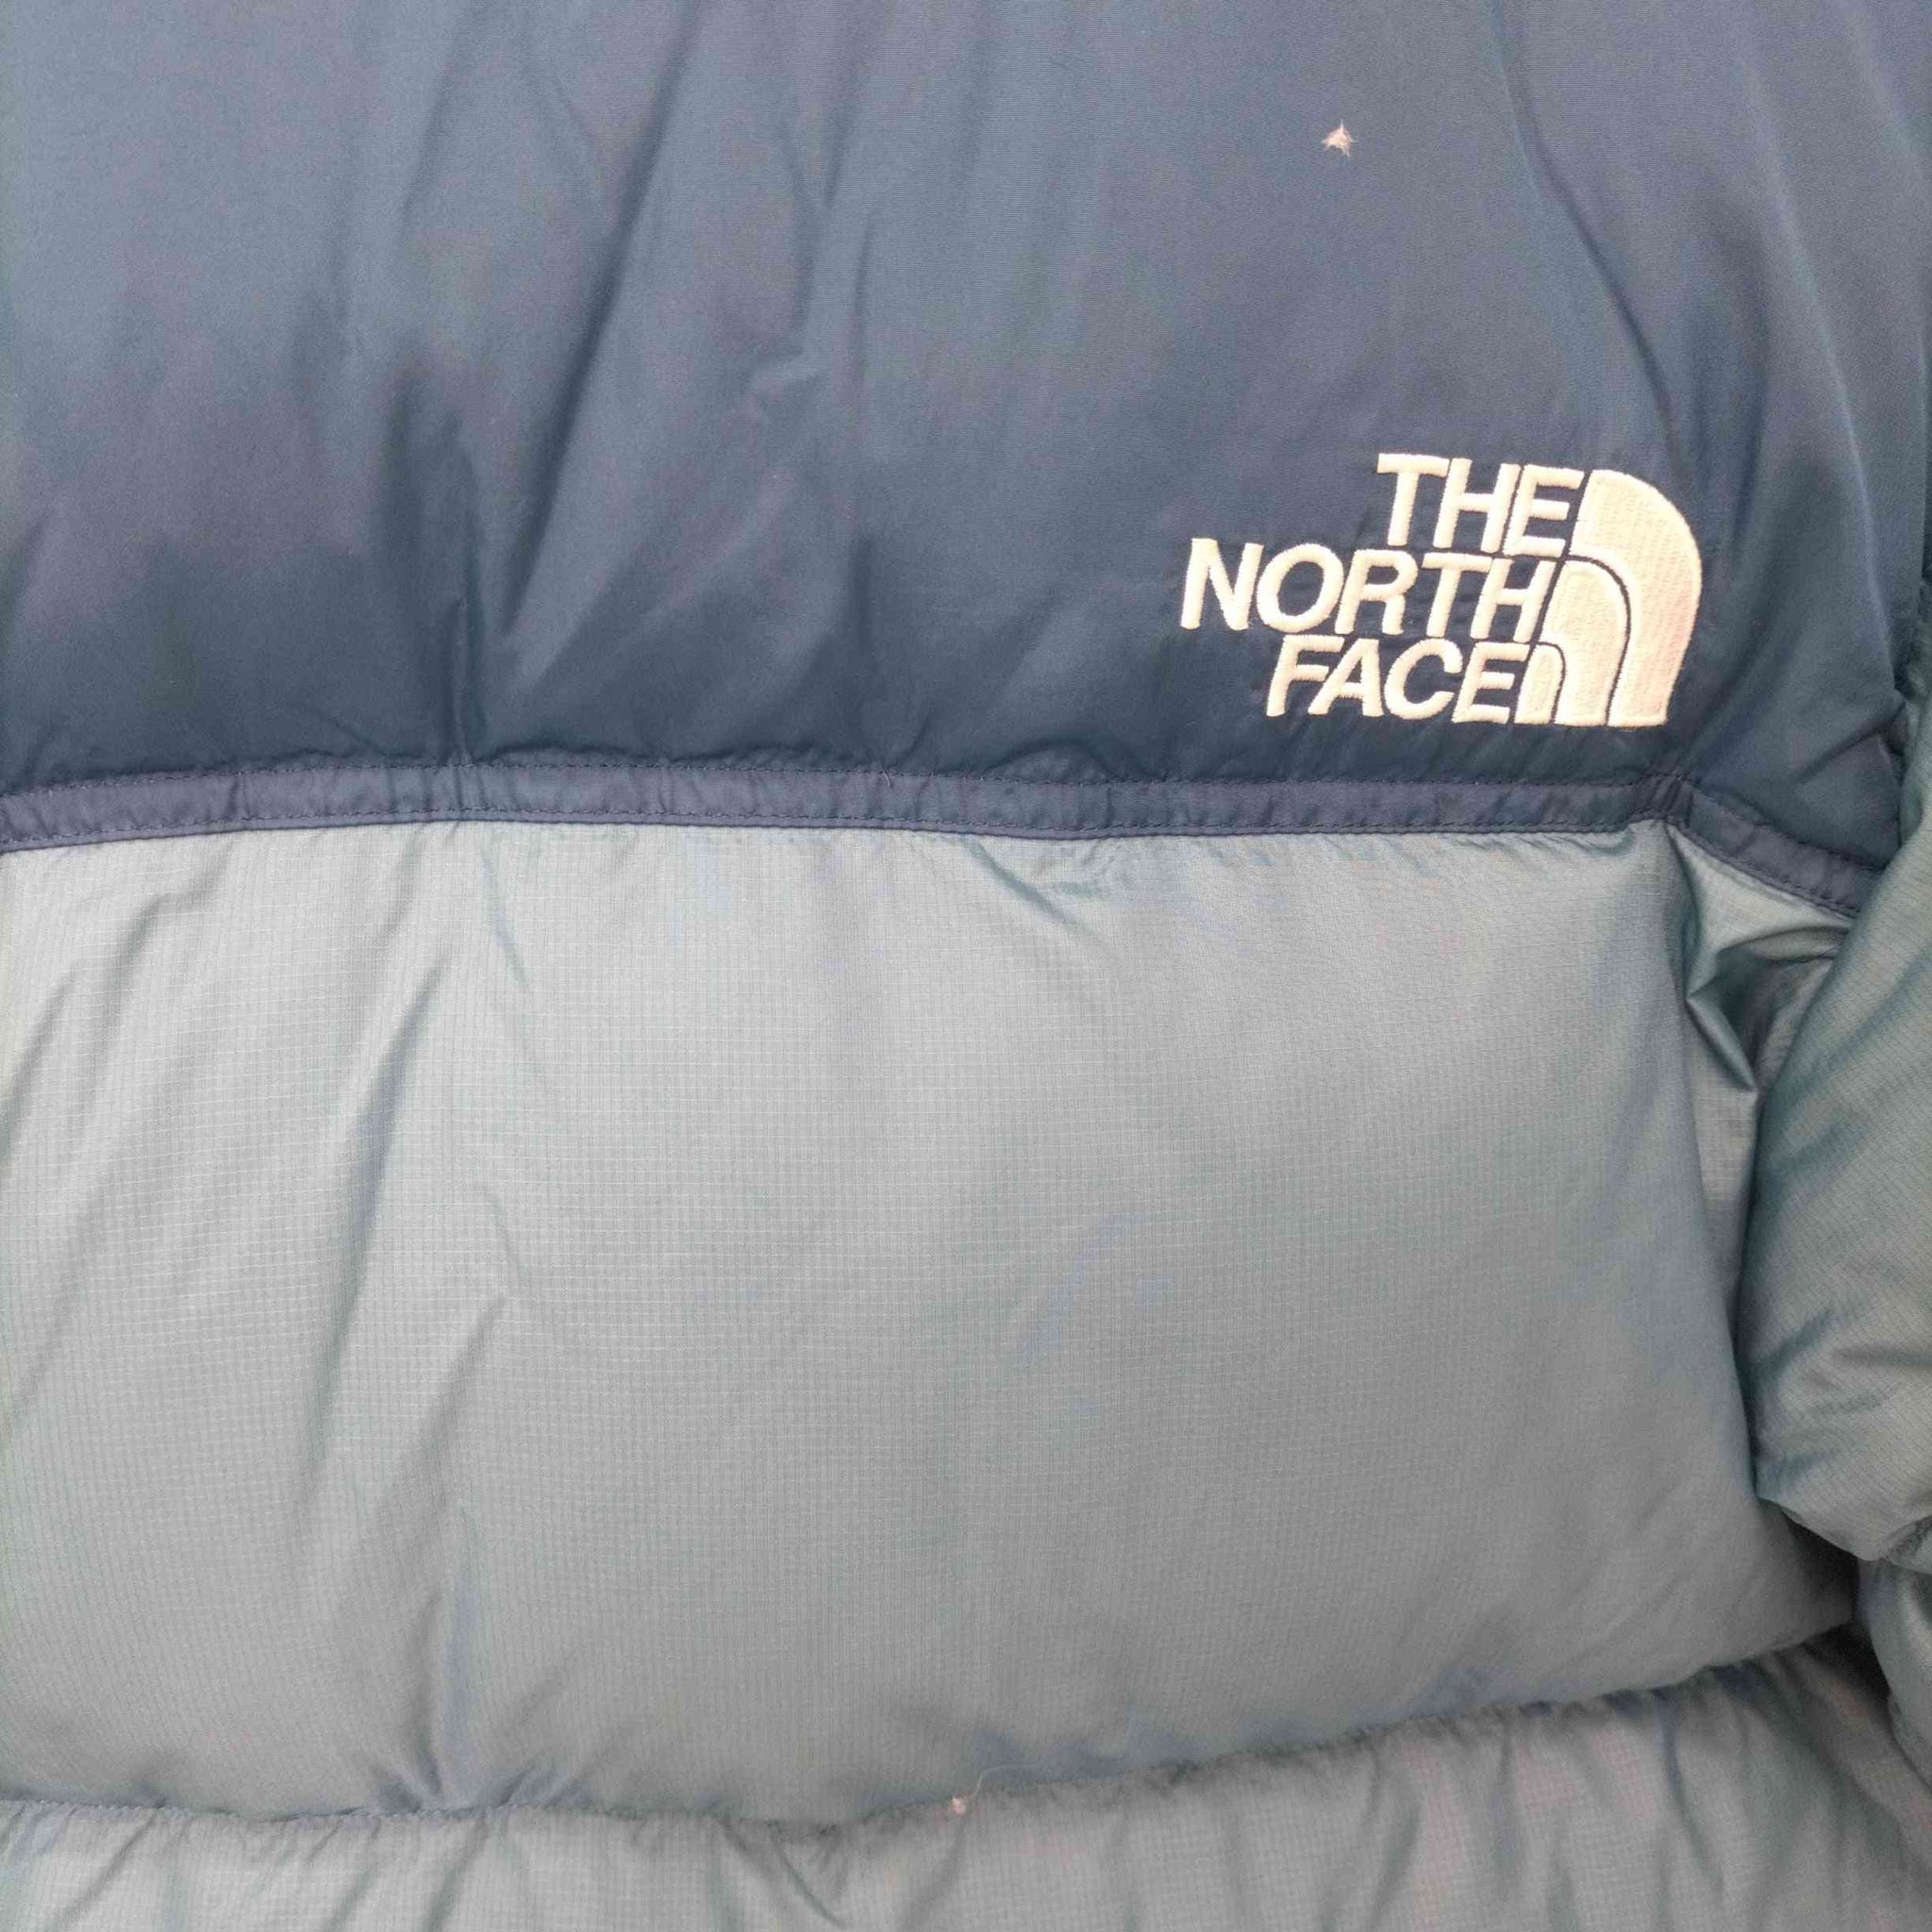 THE NORTH FACE(ザノースフェイス)Nuptse Jacket